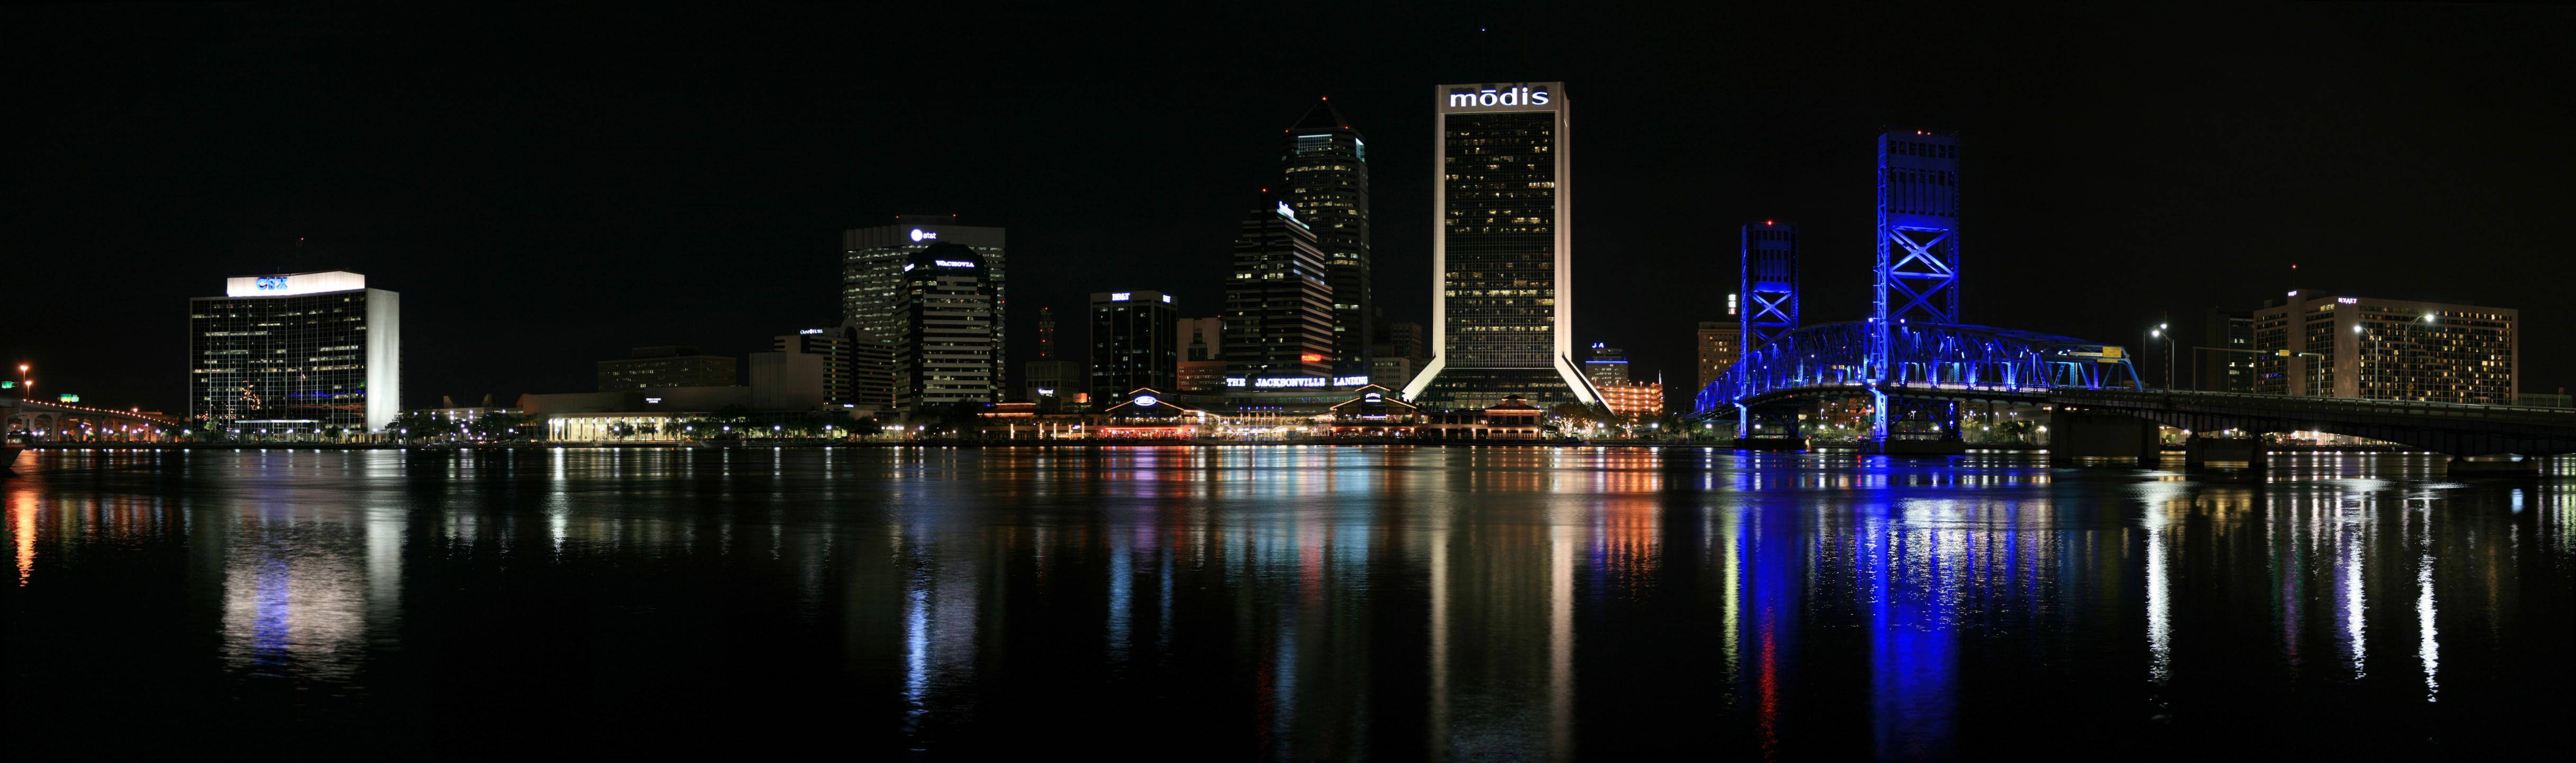 Jacksonville Skyline Night Reflection Wallpaper